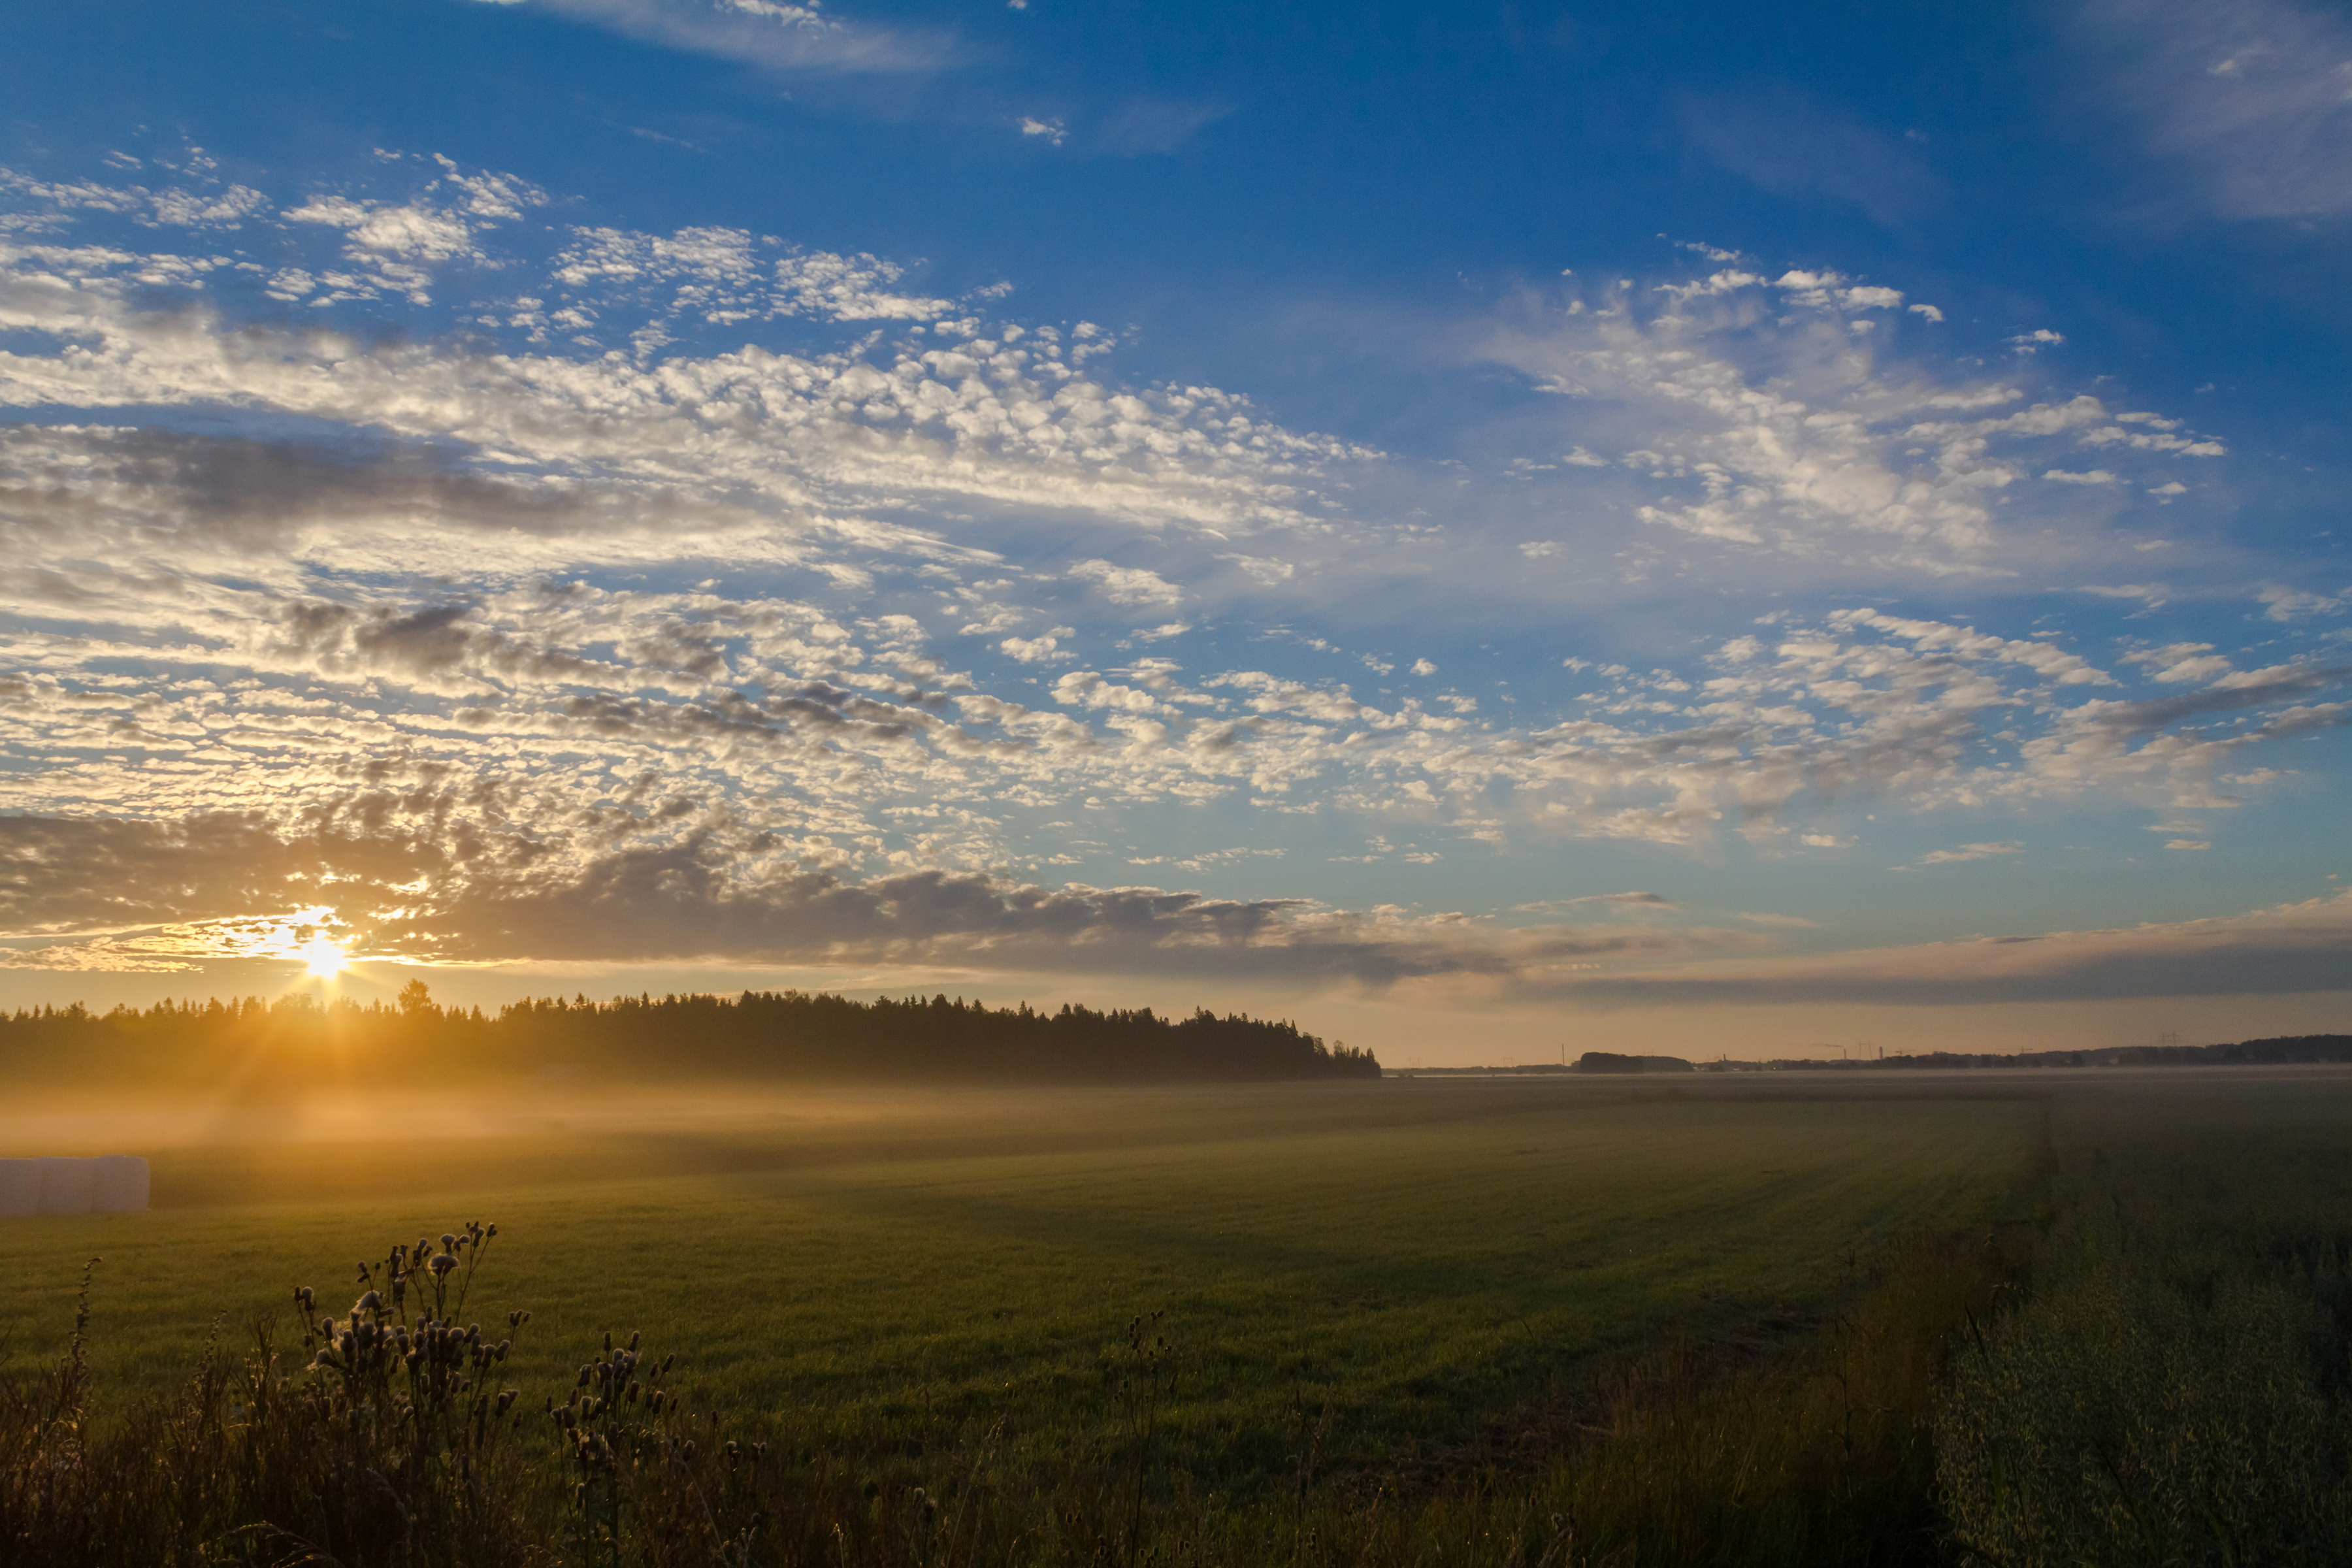 Rural landscape at sunset in the Ostrobothnia region of Finland.